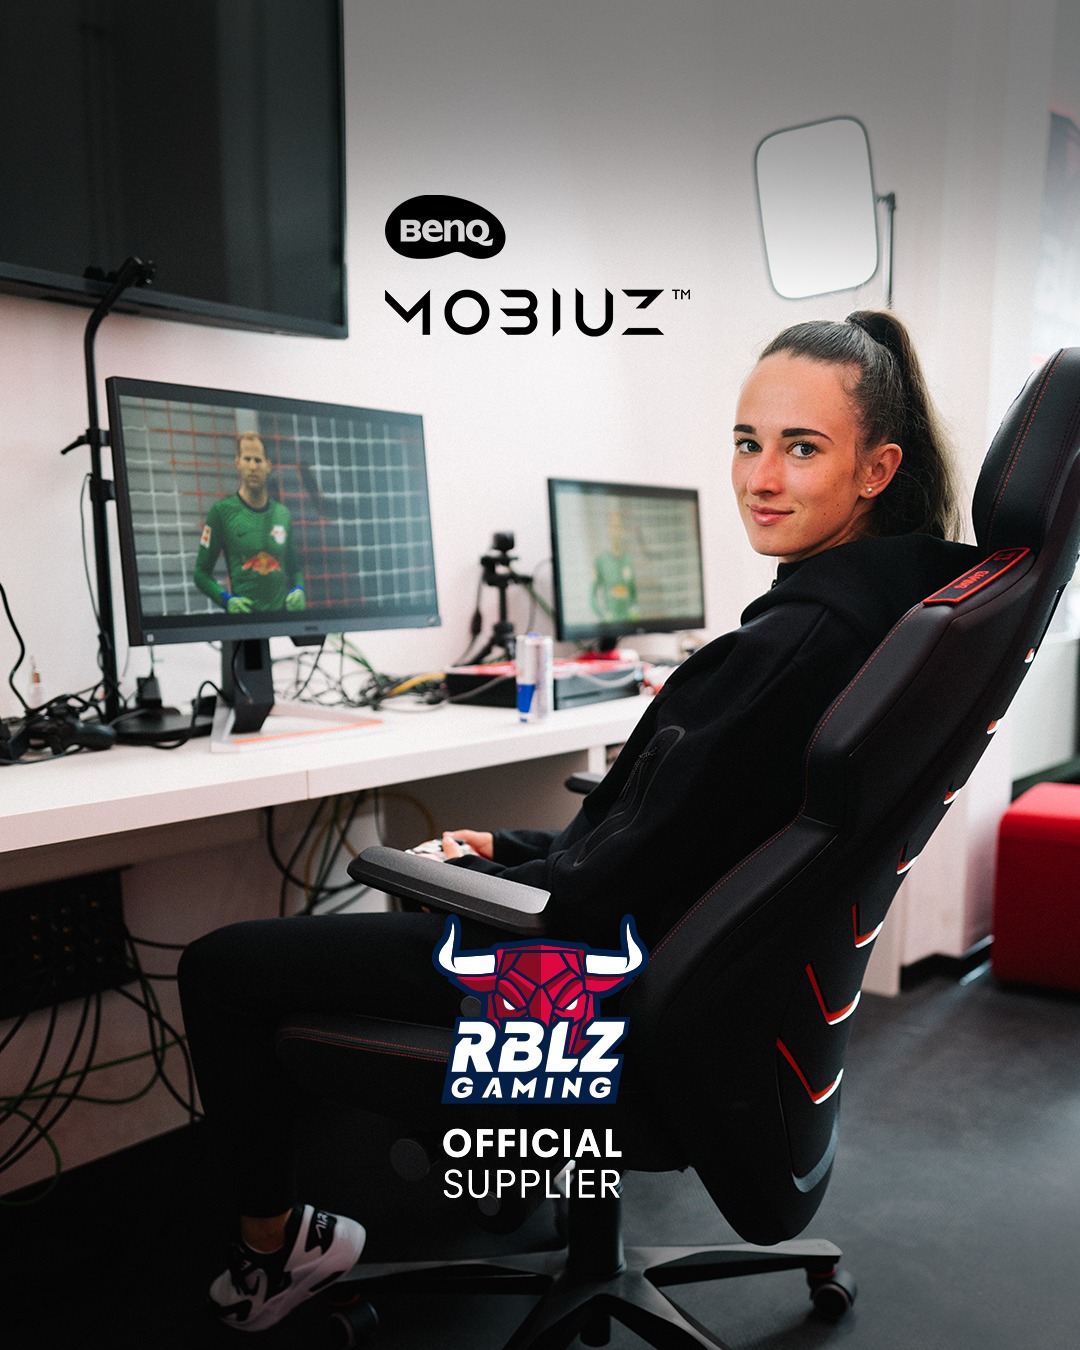 RBLZ_Lena im RBLZ Gaming Room mit dem EX2510S 165Hz Gaming Monitor